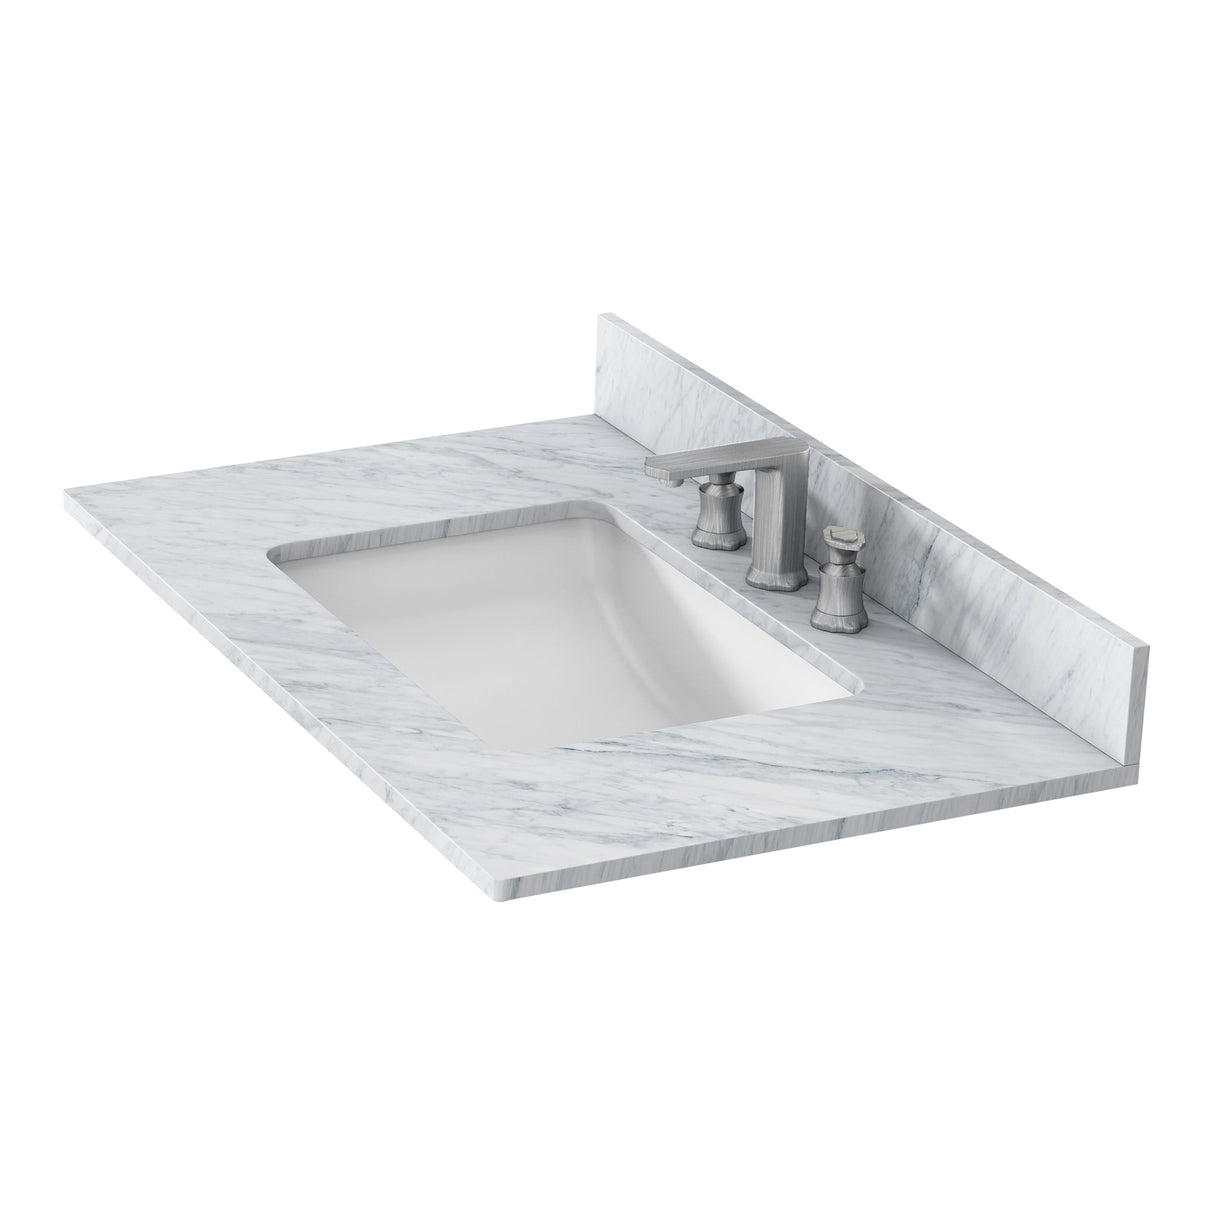 Bathroom Vanity Top36 "x 22" natural stone   Carrara white natural marble, CUPC ceramic sink and three-hole faucet hole with backsplash